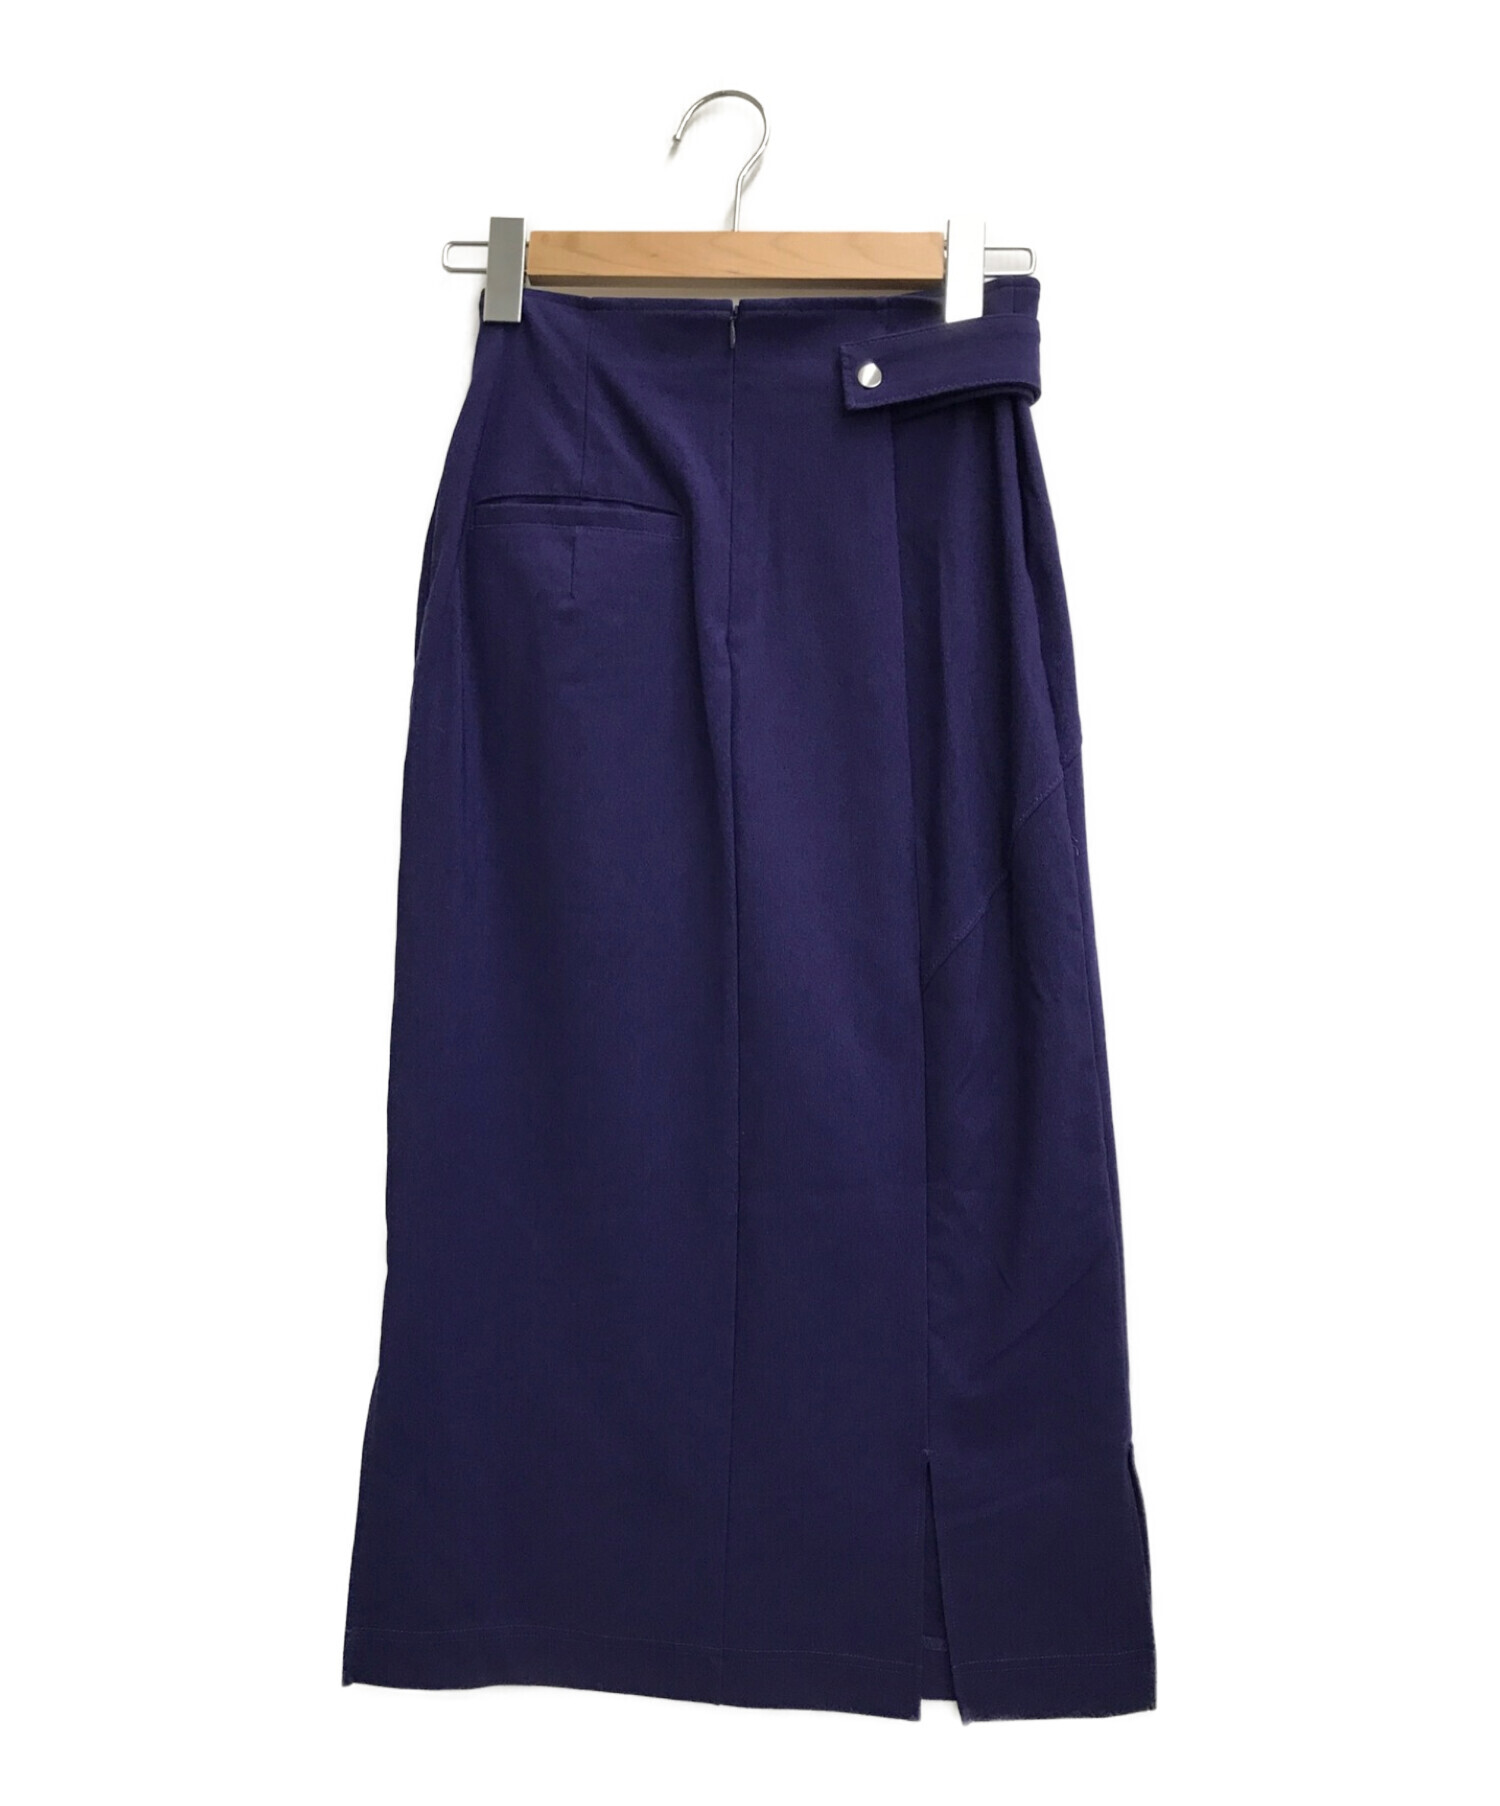 UNITED TOKYO (ユナイテッドトーキョー) ナイロンピケタイトスカート パープル サイズ:1